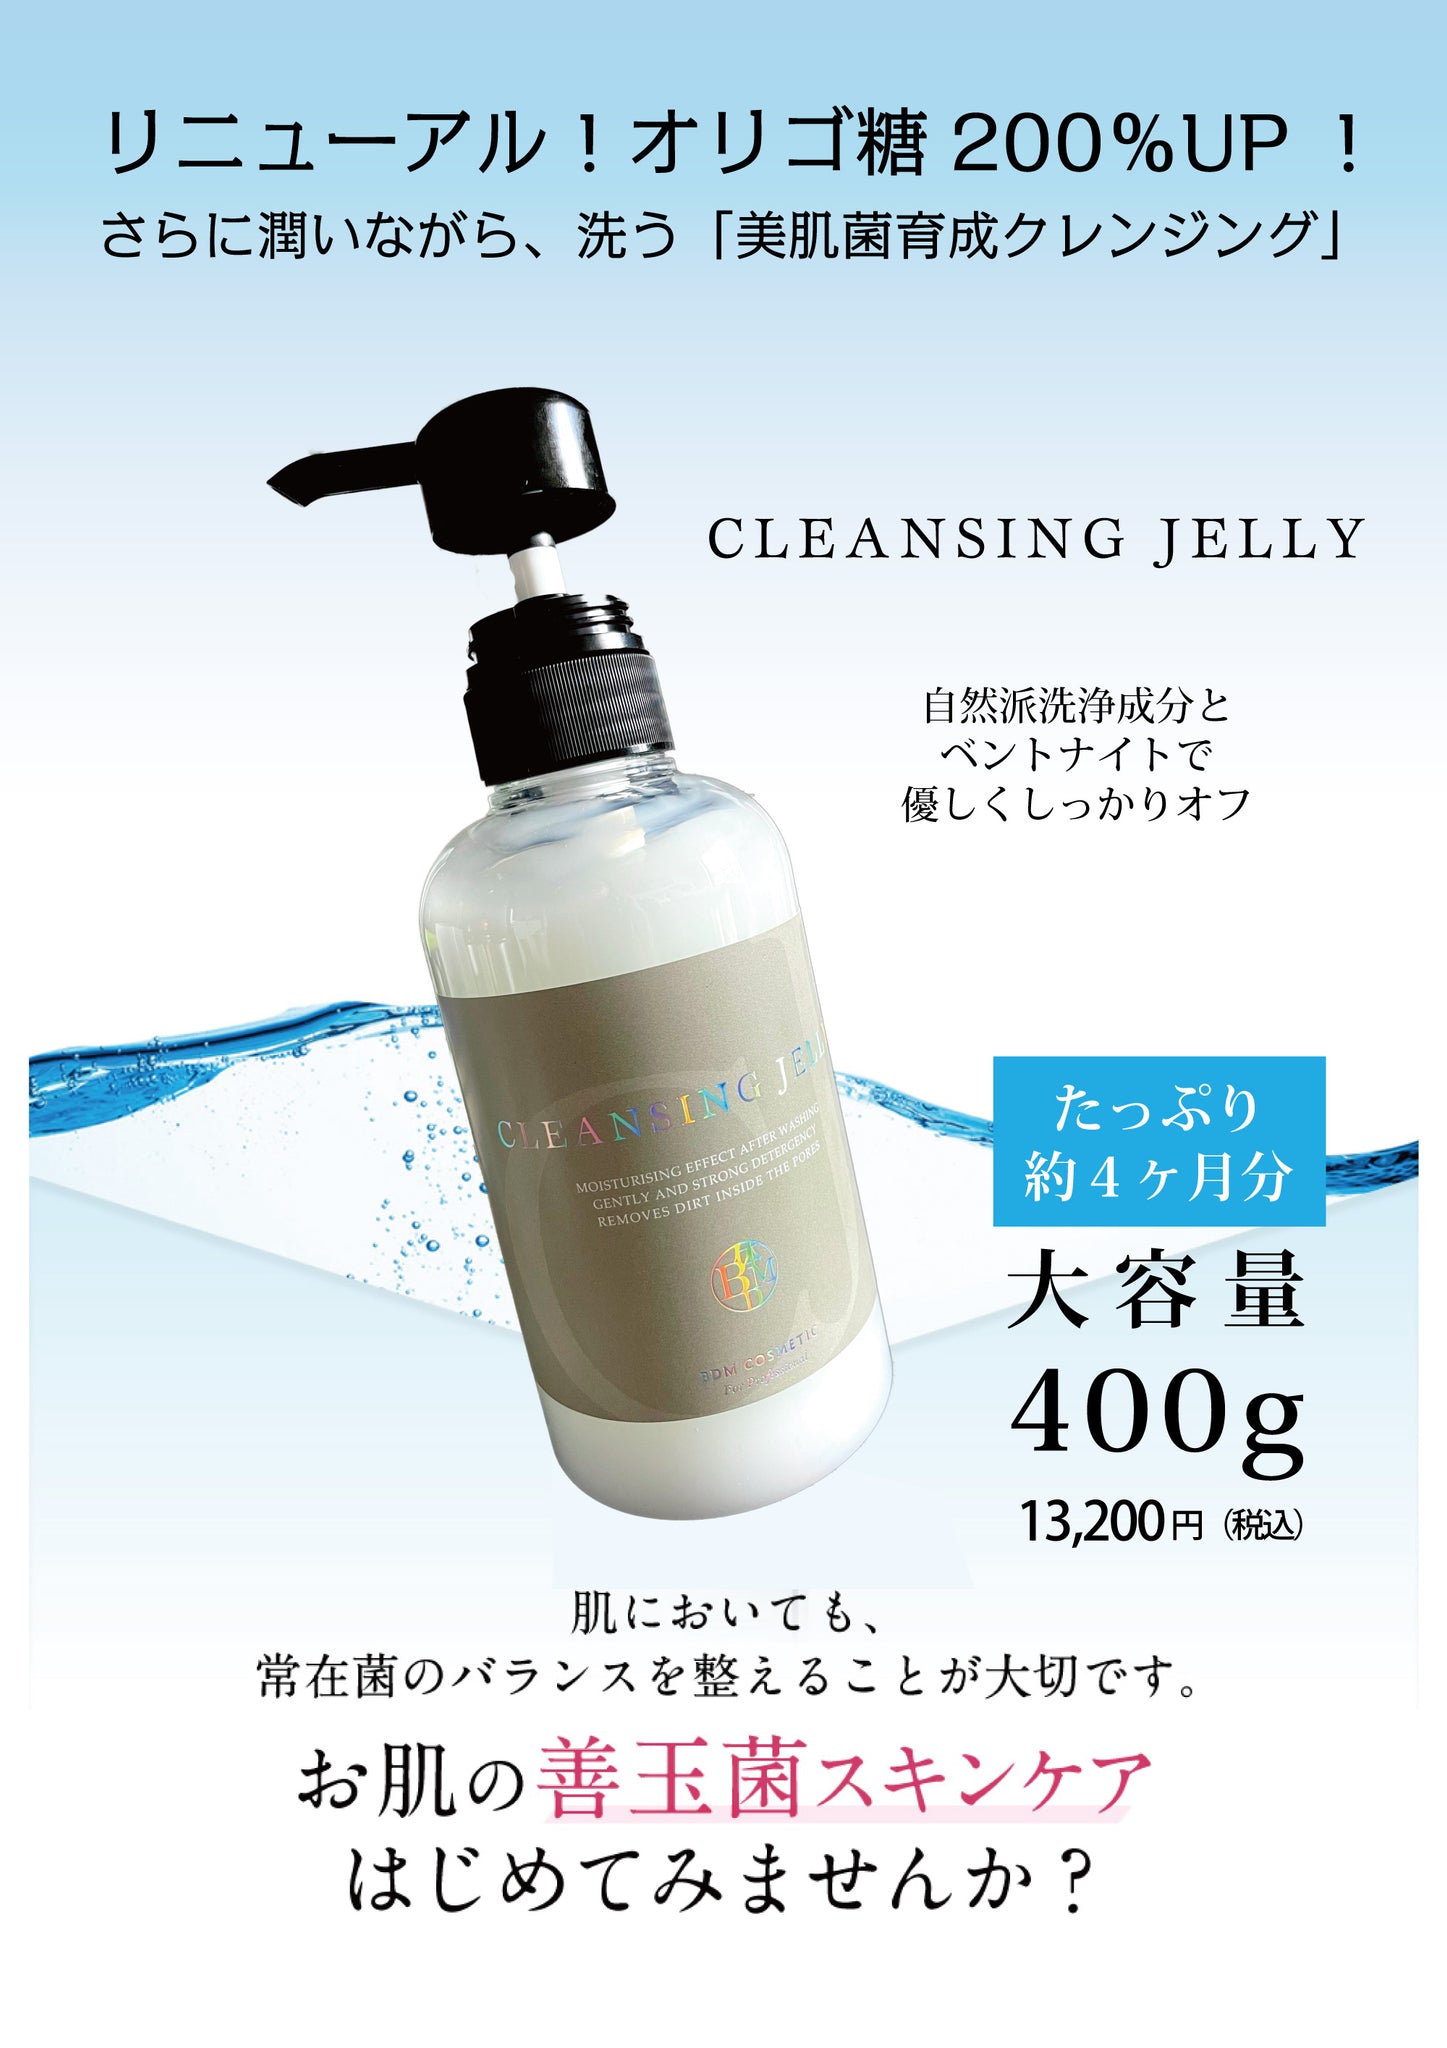 BDM Cleansing Jerry 400g [Beautiful skin skin care]